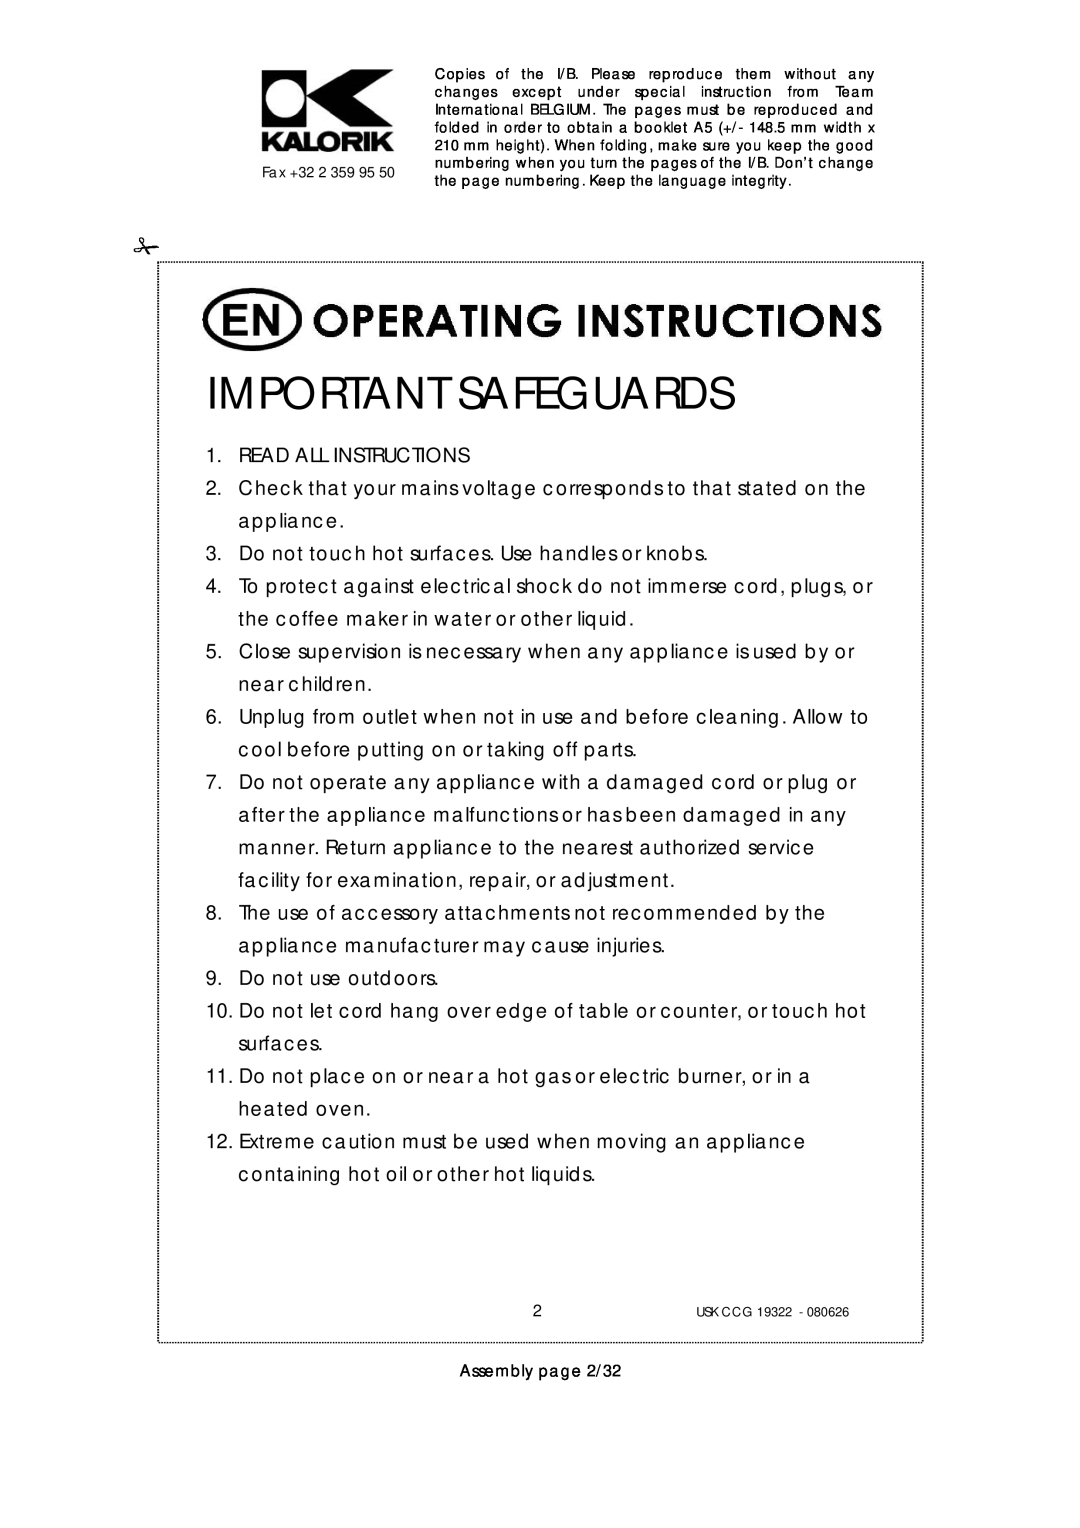 Kalorik USK CCG080626, USK CCG 19322 manual Important Safeguards, Read All Instructions 